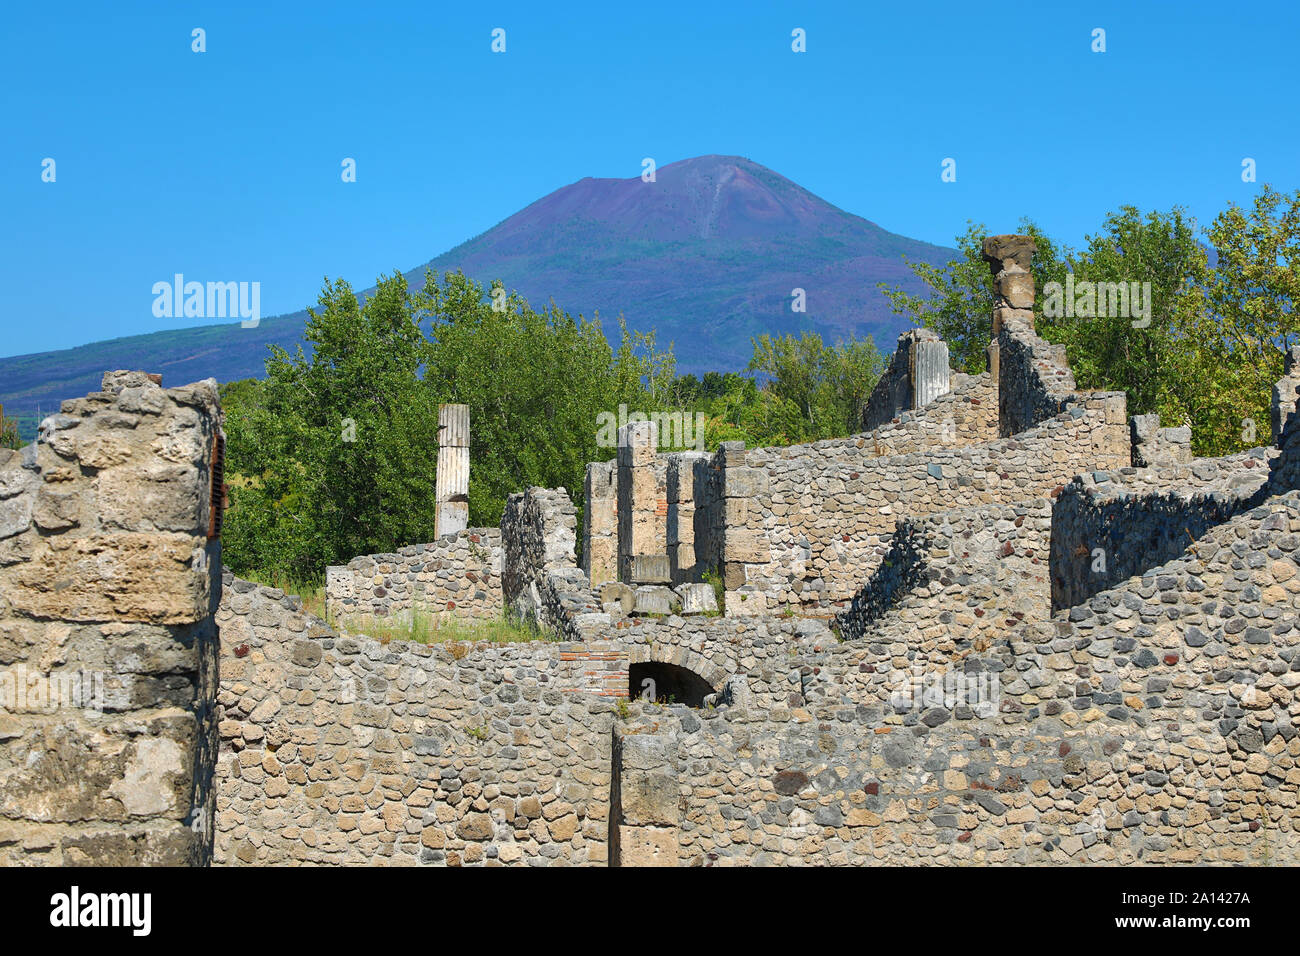 Ruins of the ancient Roman city of Pompeii and Mount Vesuvius, Italy Stock Photo